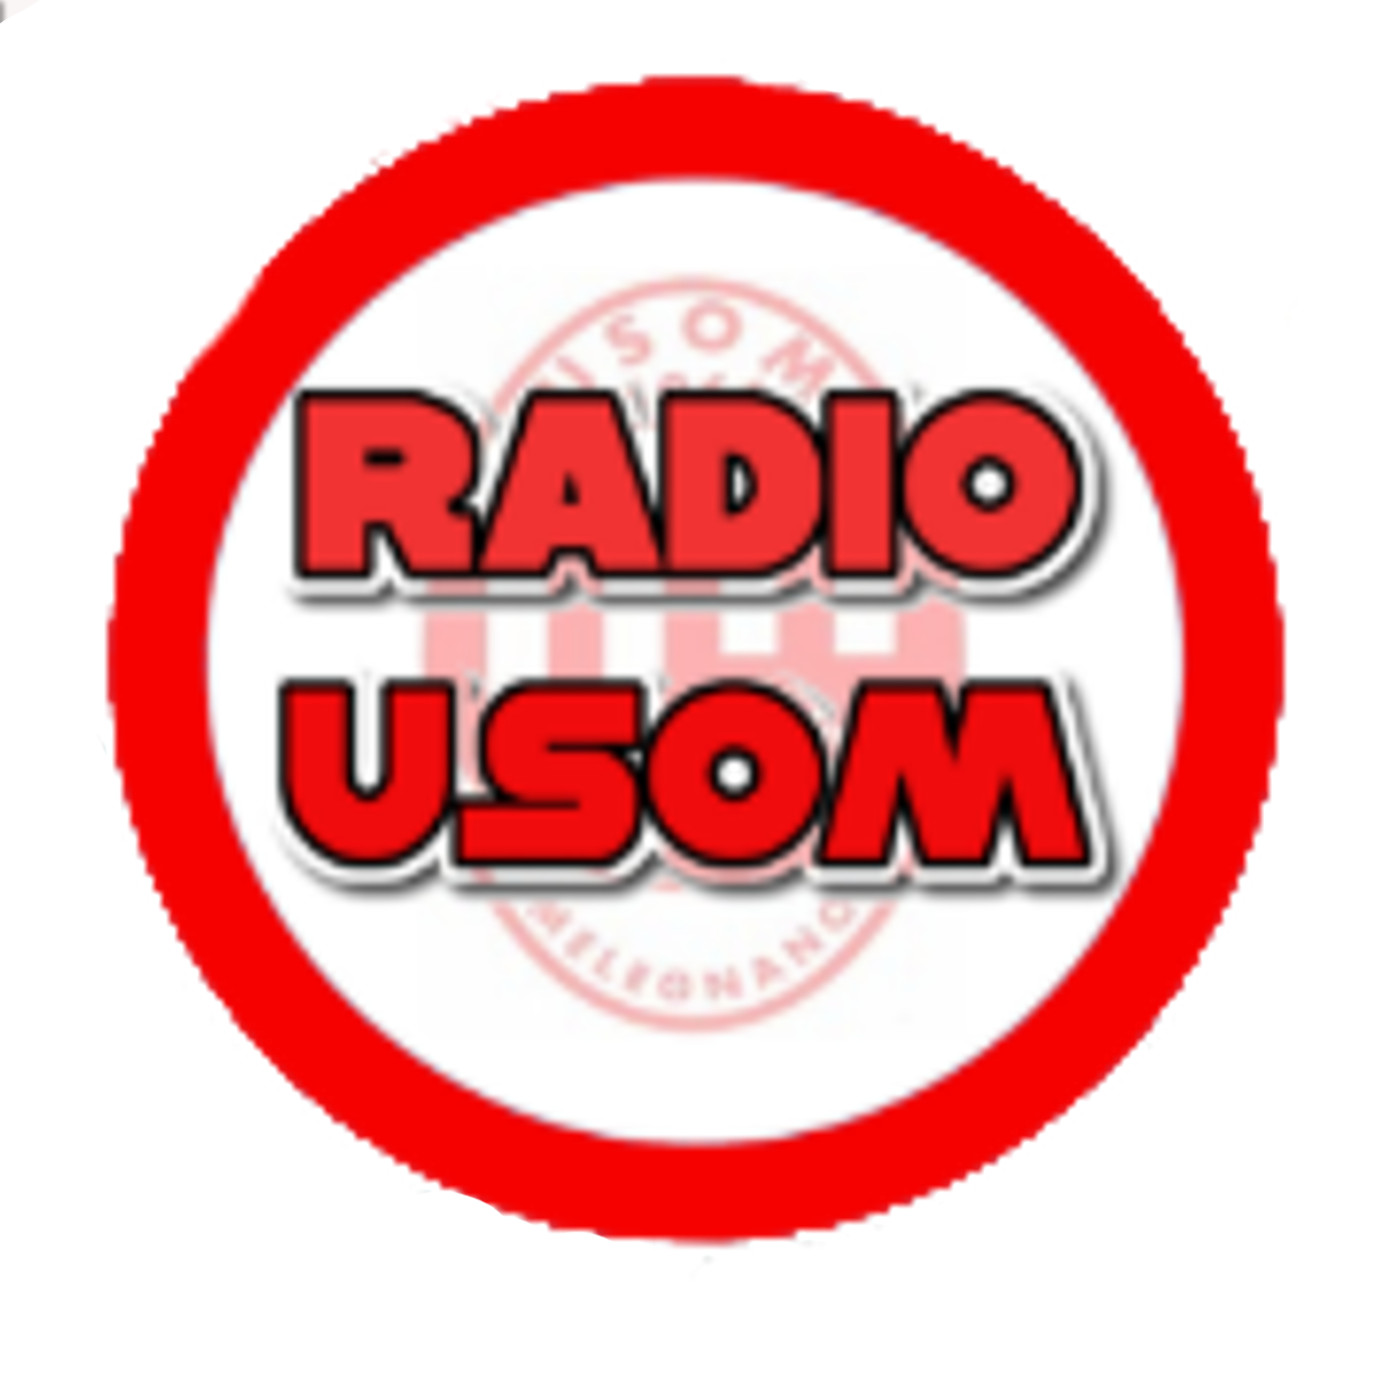 Radio Usom